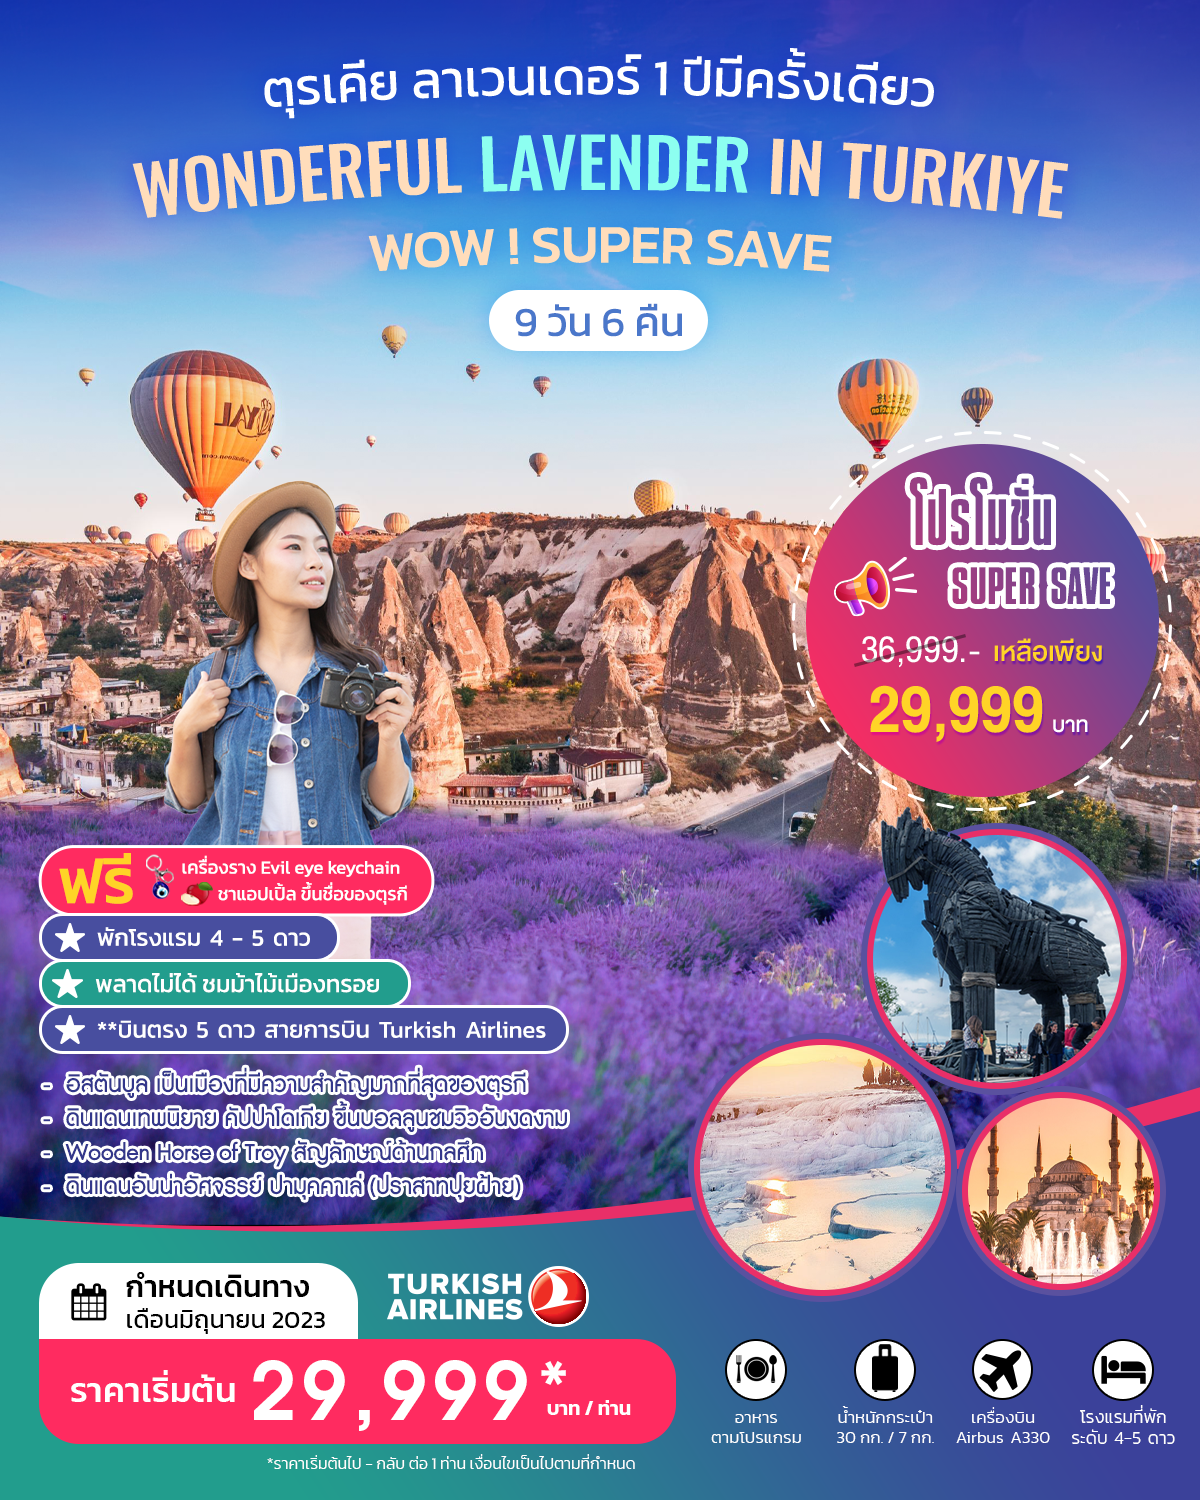 SUPER SAVE  !  WONDERFUL LAVENDER IN TURKIYE ตุรเคีย ลาเวนเดอร์  มิถุนายน 2023